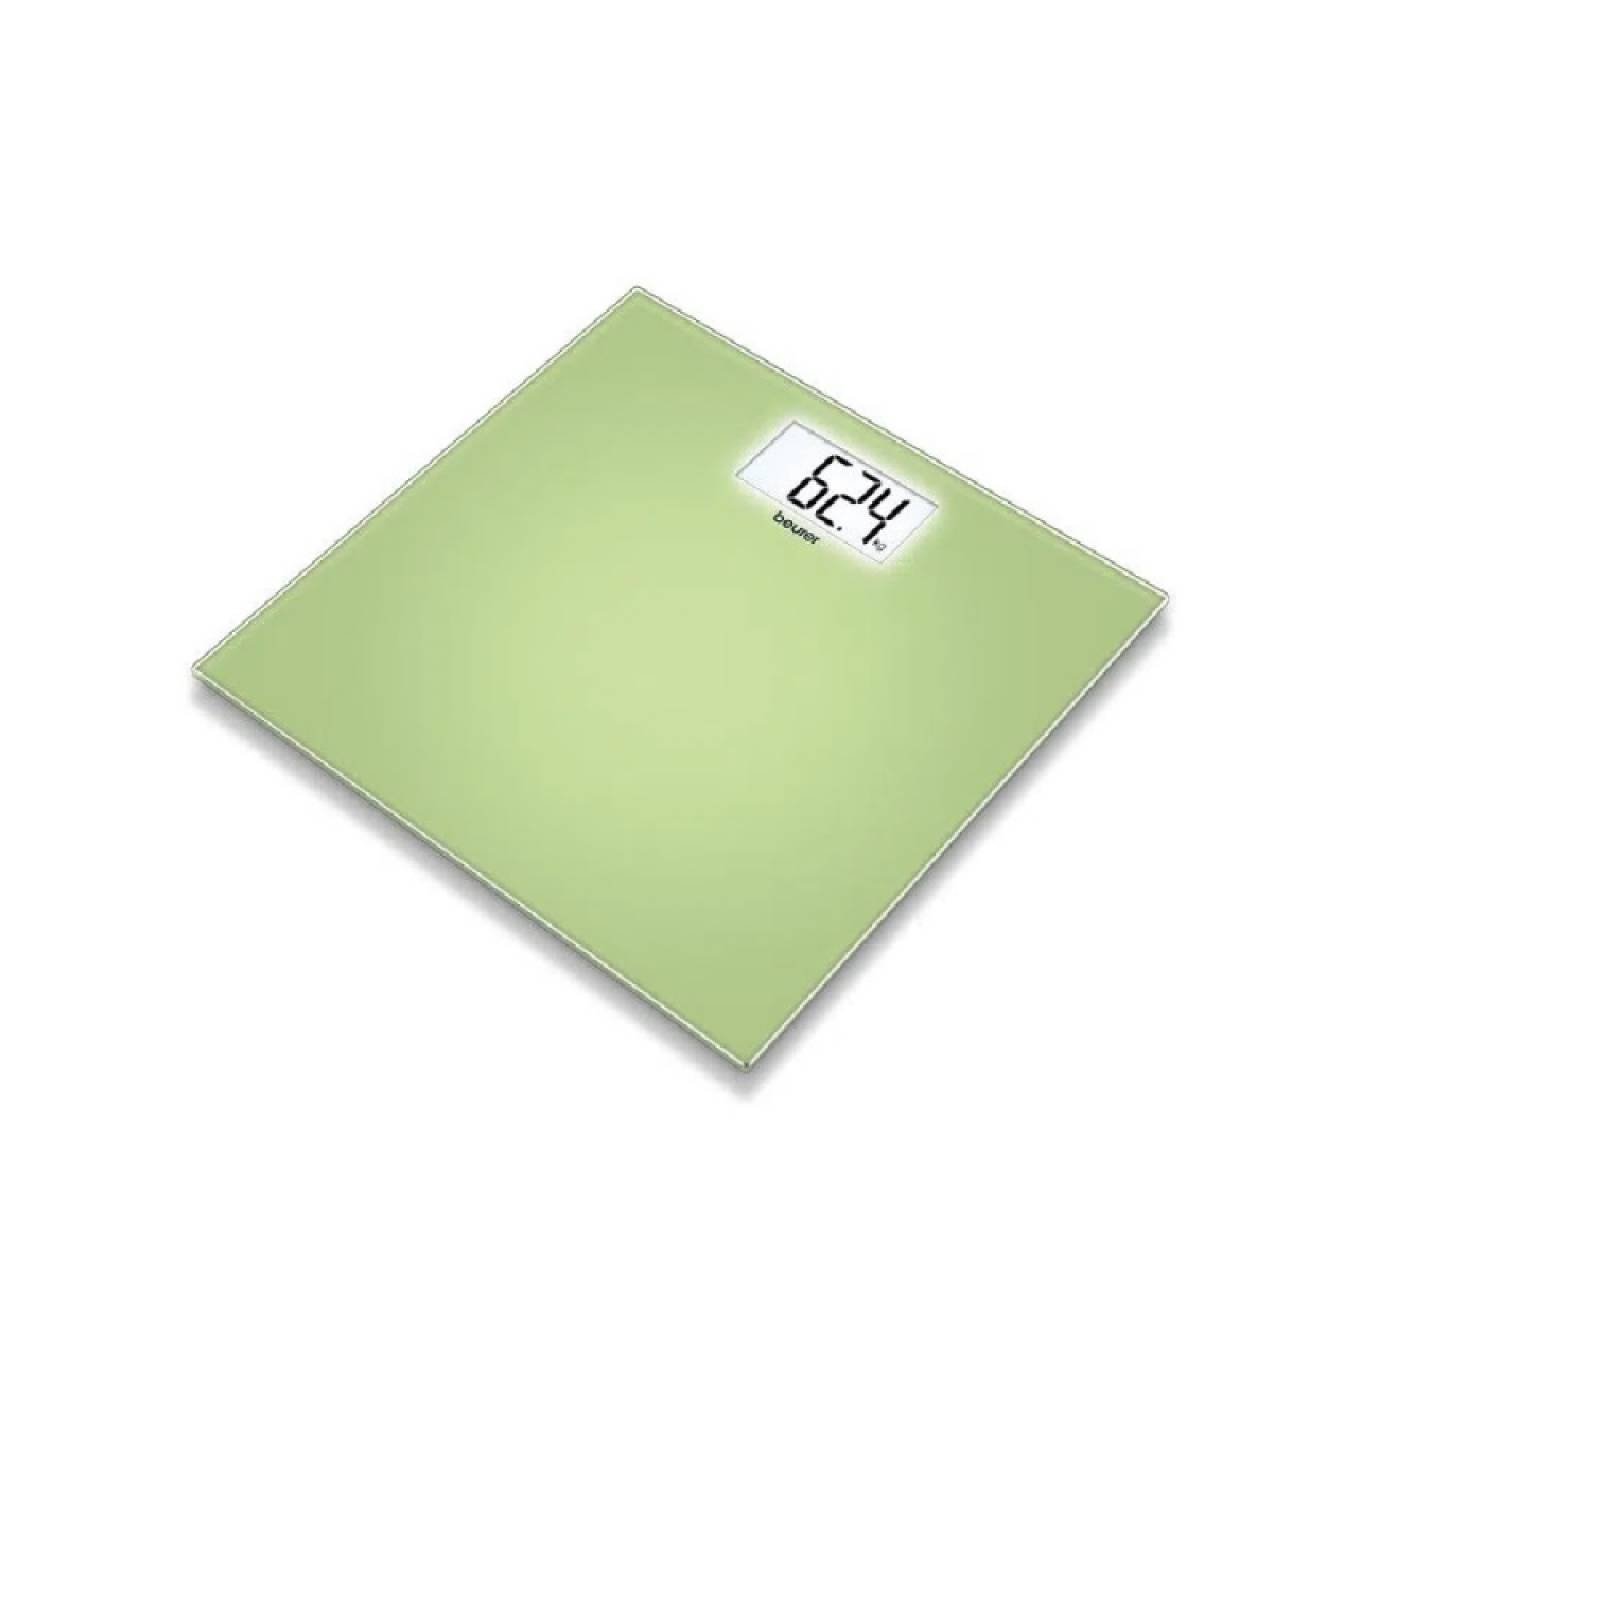 Báscula Digital Baño Vidrio Verde Pantalla Lcd GS208 Beurer